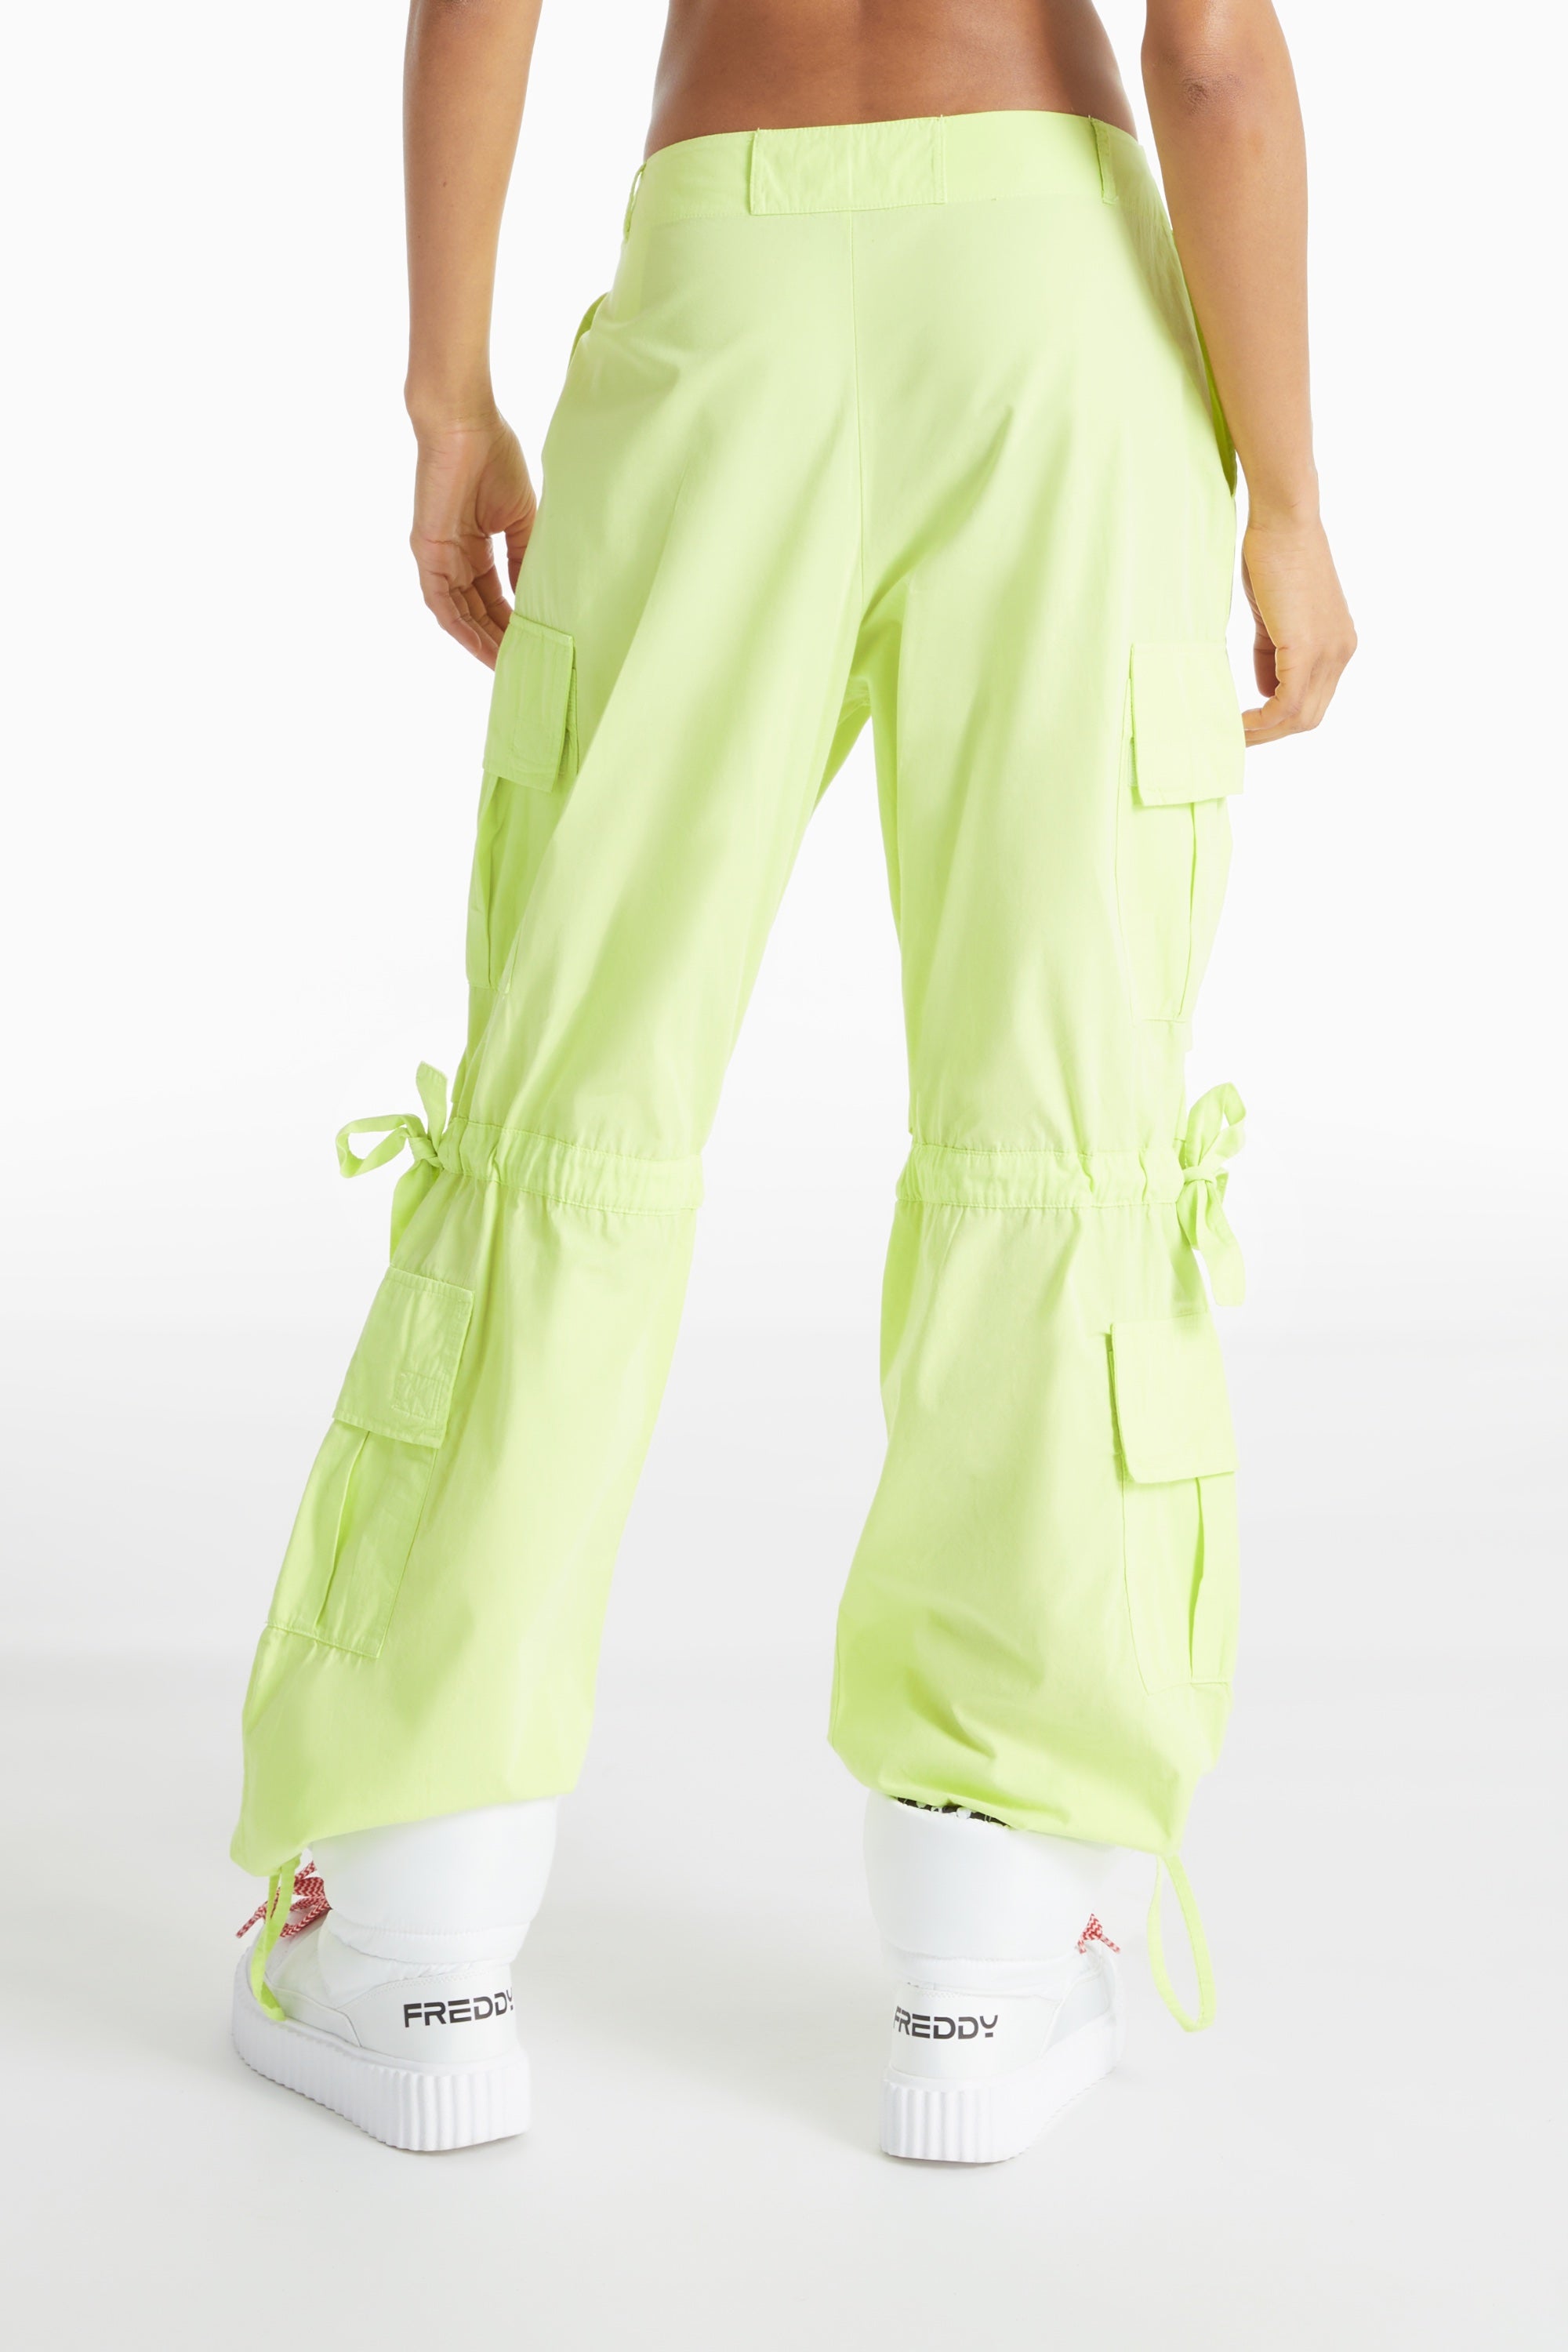 (BRITNEYF301-D81X) Freddy Poplin Cargo Pants with side pockets in Lime Green